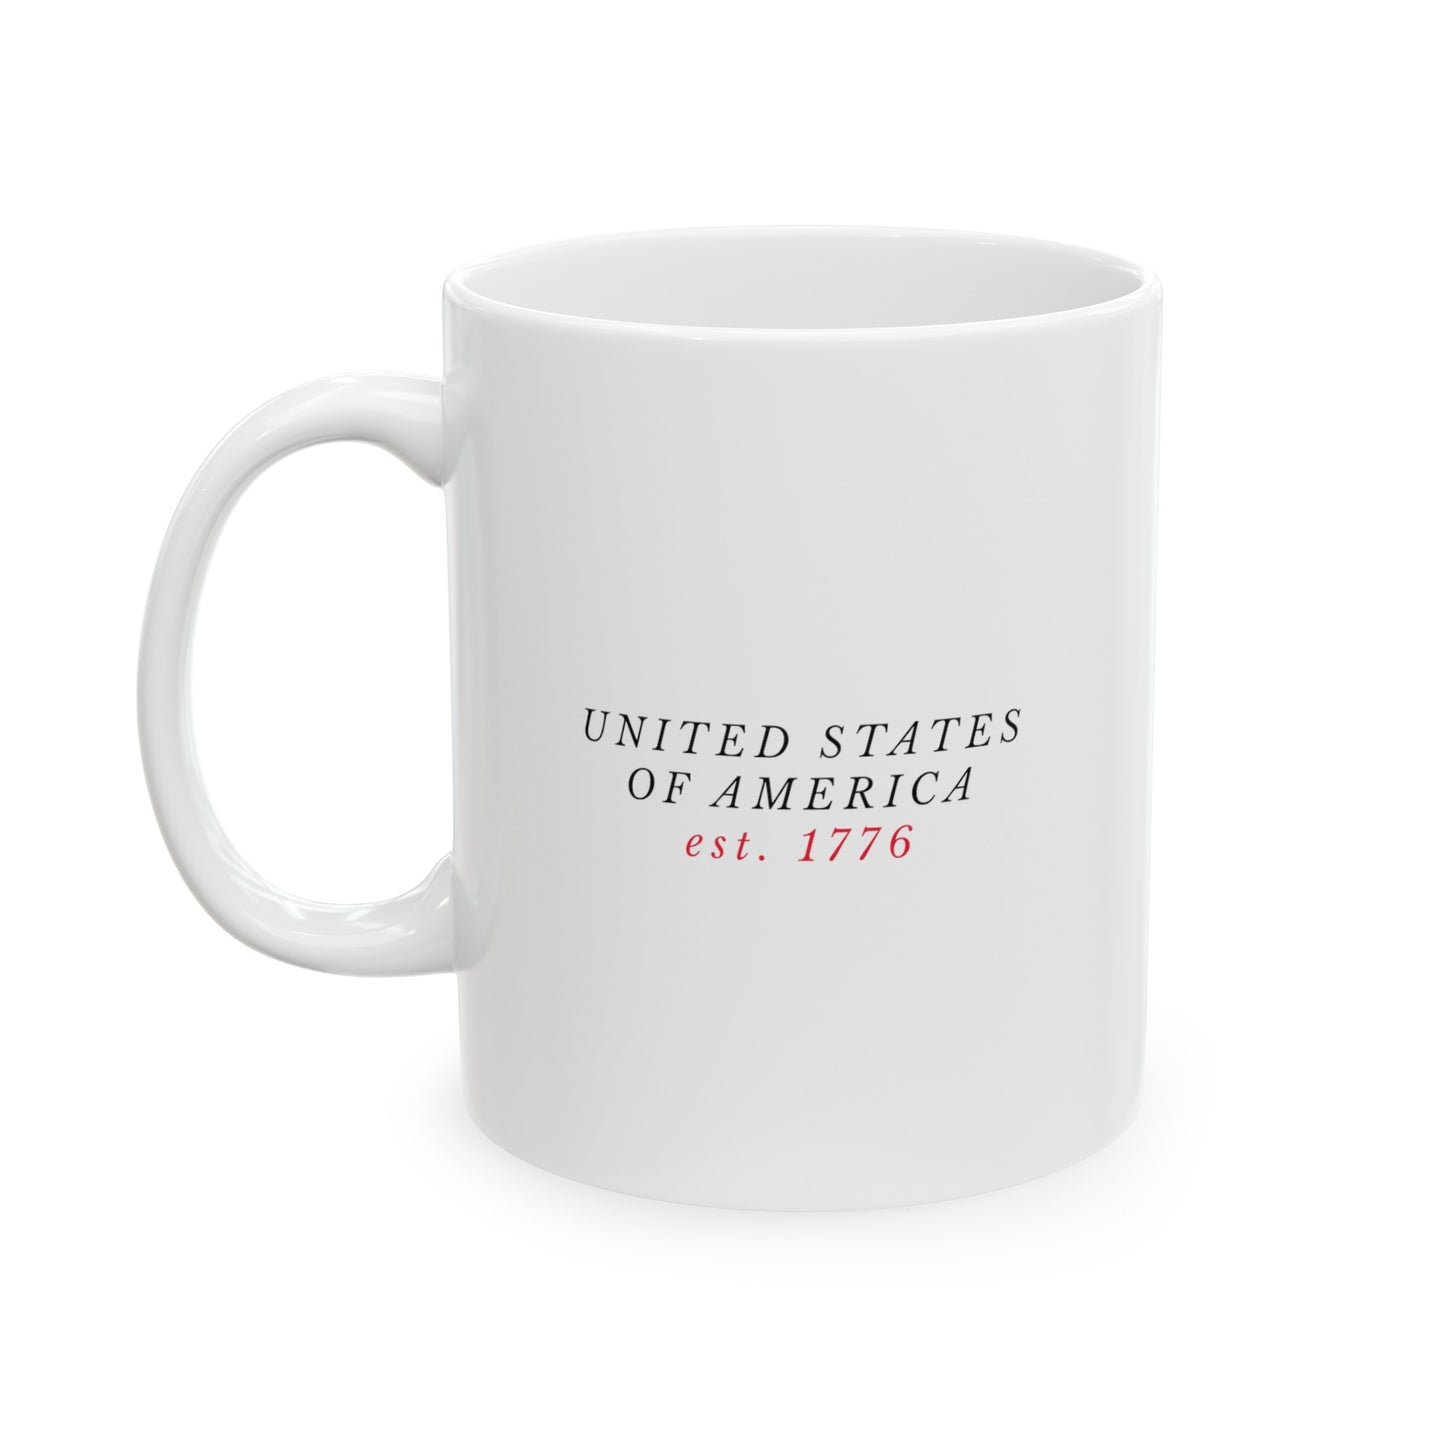 United States of America est. 1776 White Ceramic Mug (11oz, 15oz)